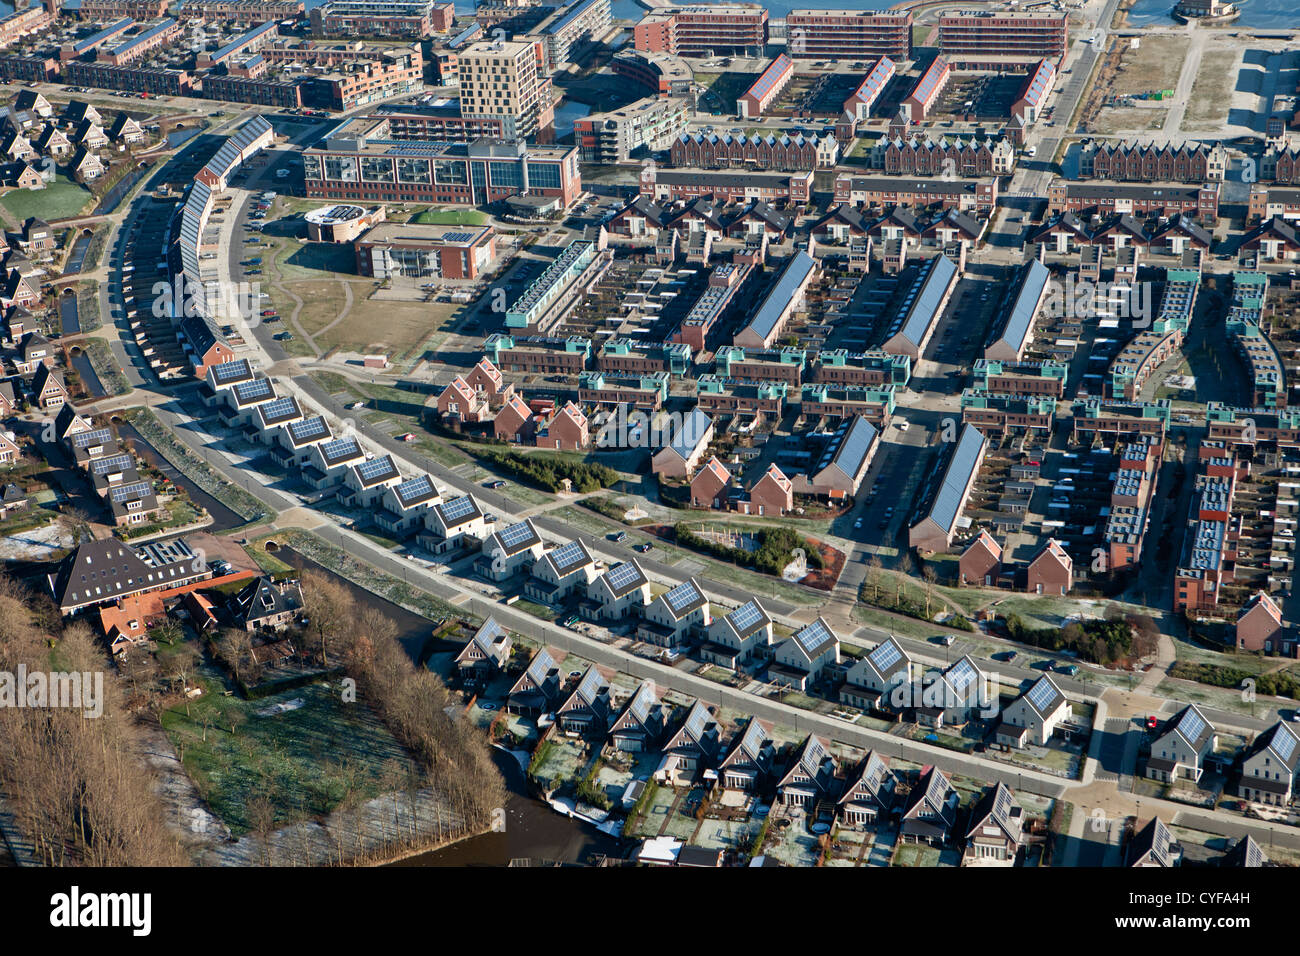 The Netherlands, Heerhugowaard, Aerial, District called City of the Sun, Dutch: Stad van de Zon. All houses with solar panels. Stock Photo